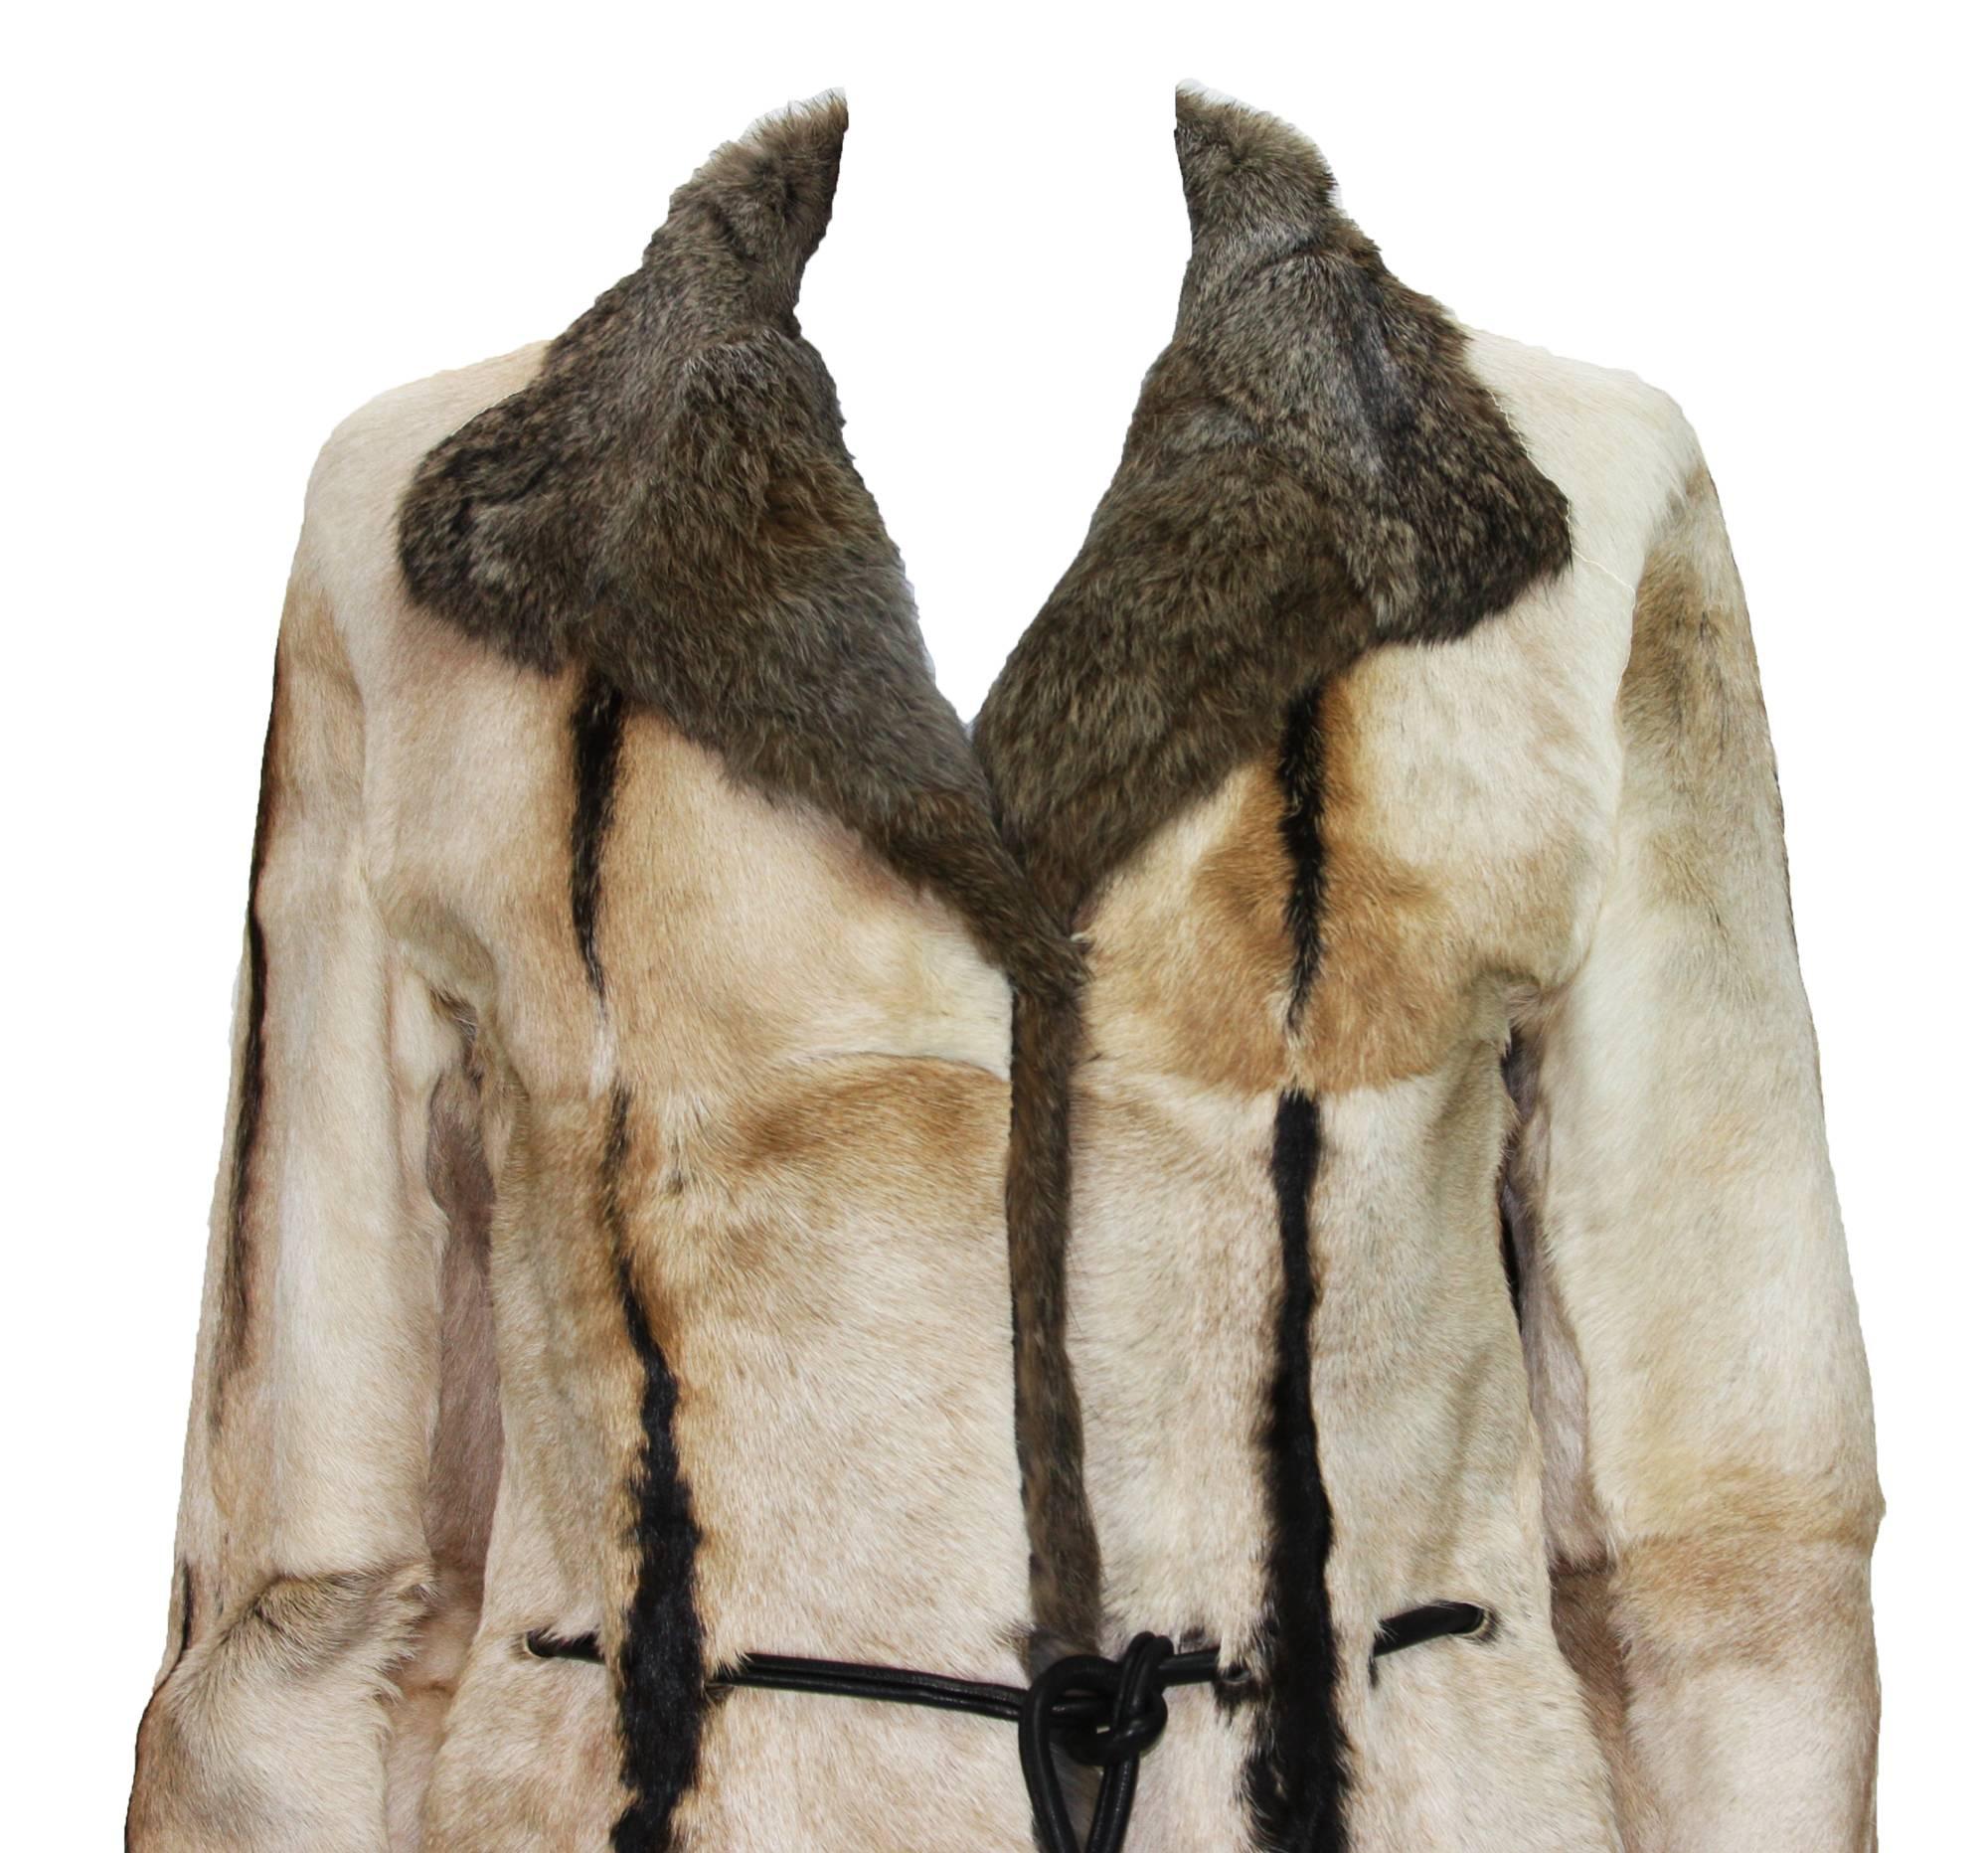 Tom Ford for Gucci Reversible Fur Beige Coat 1